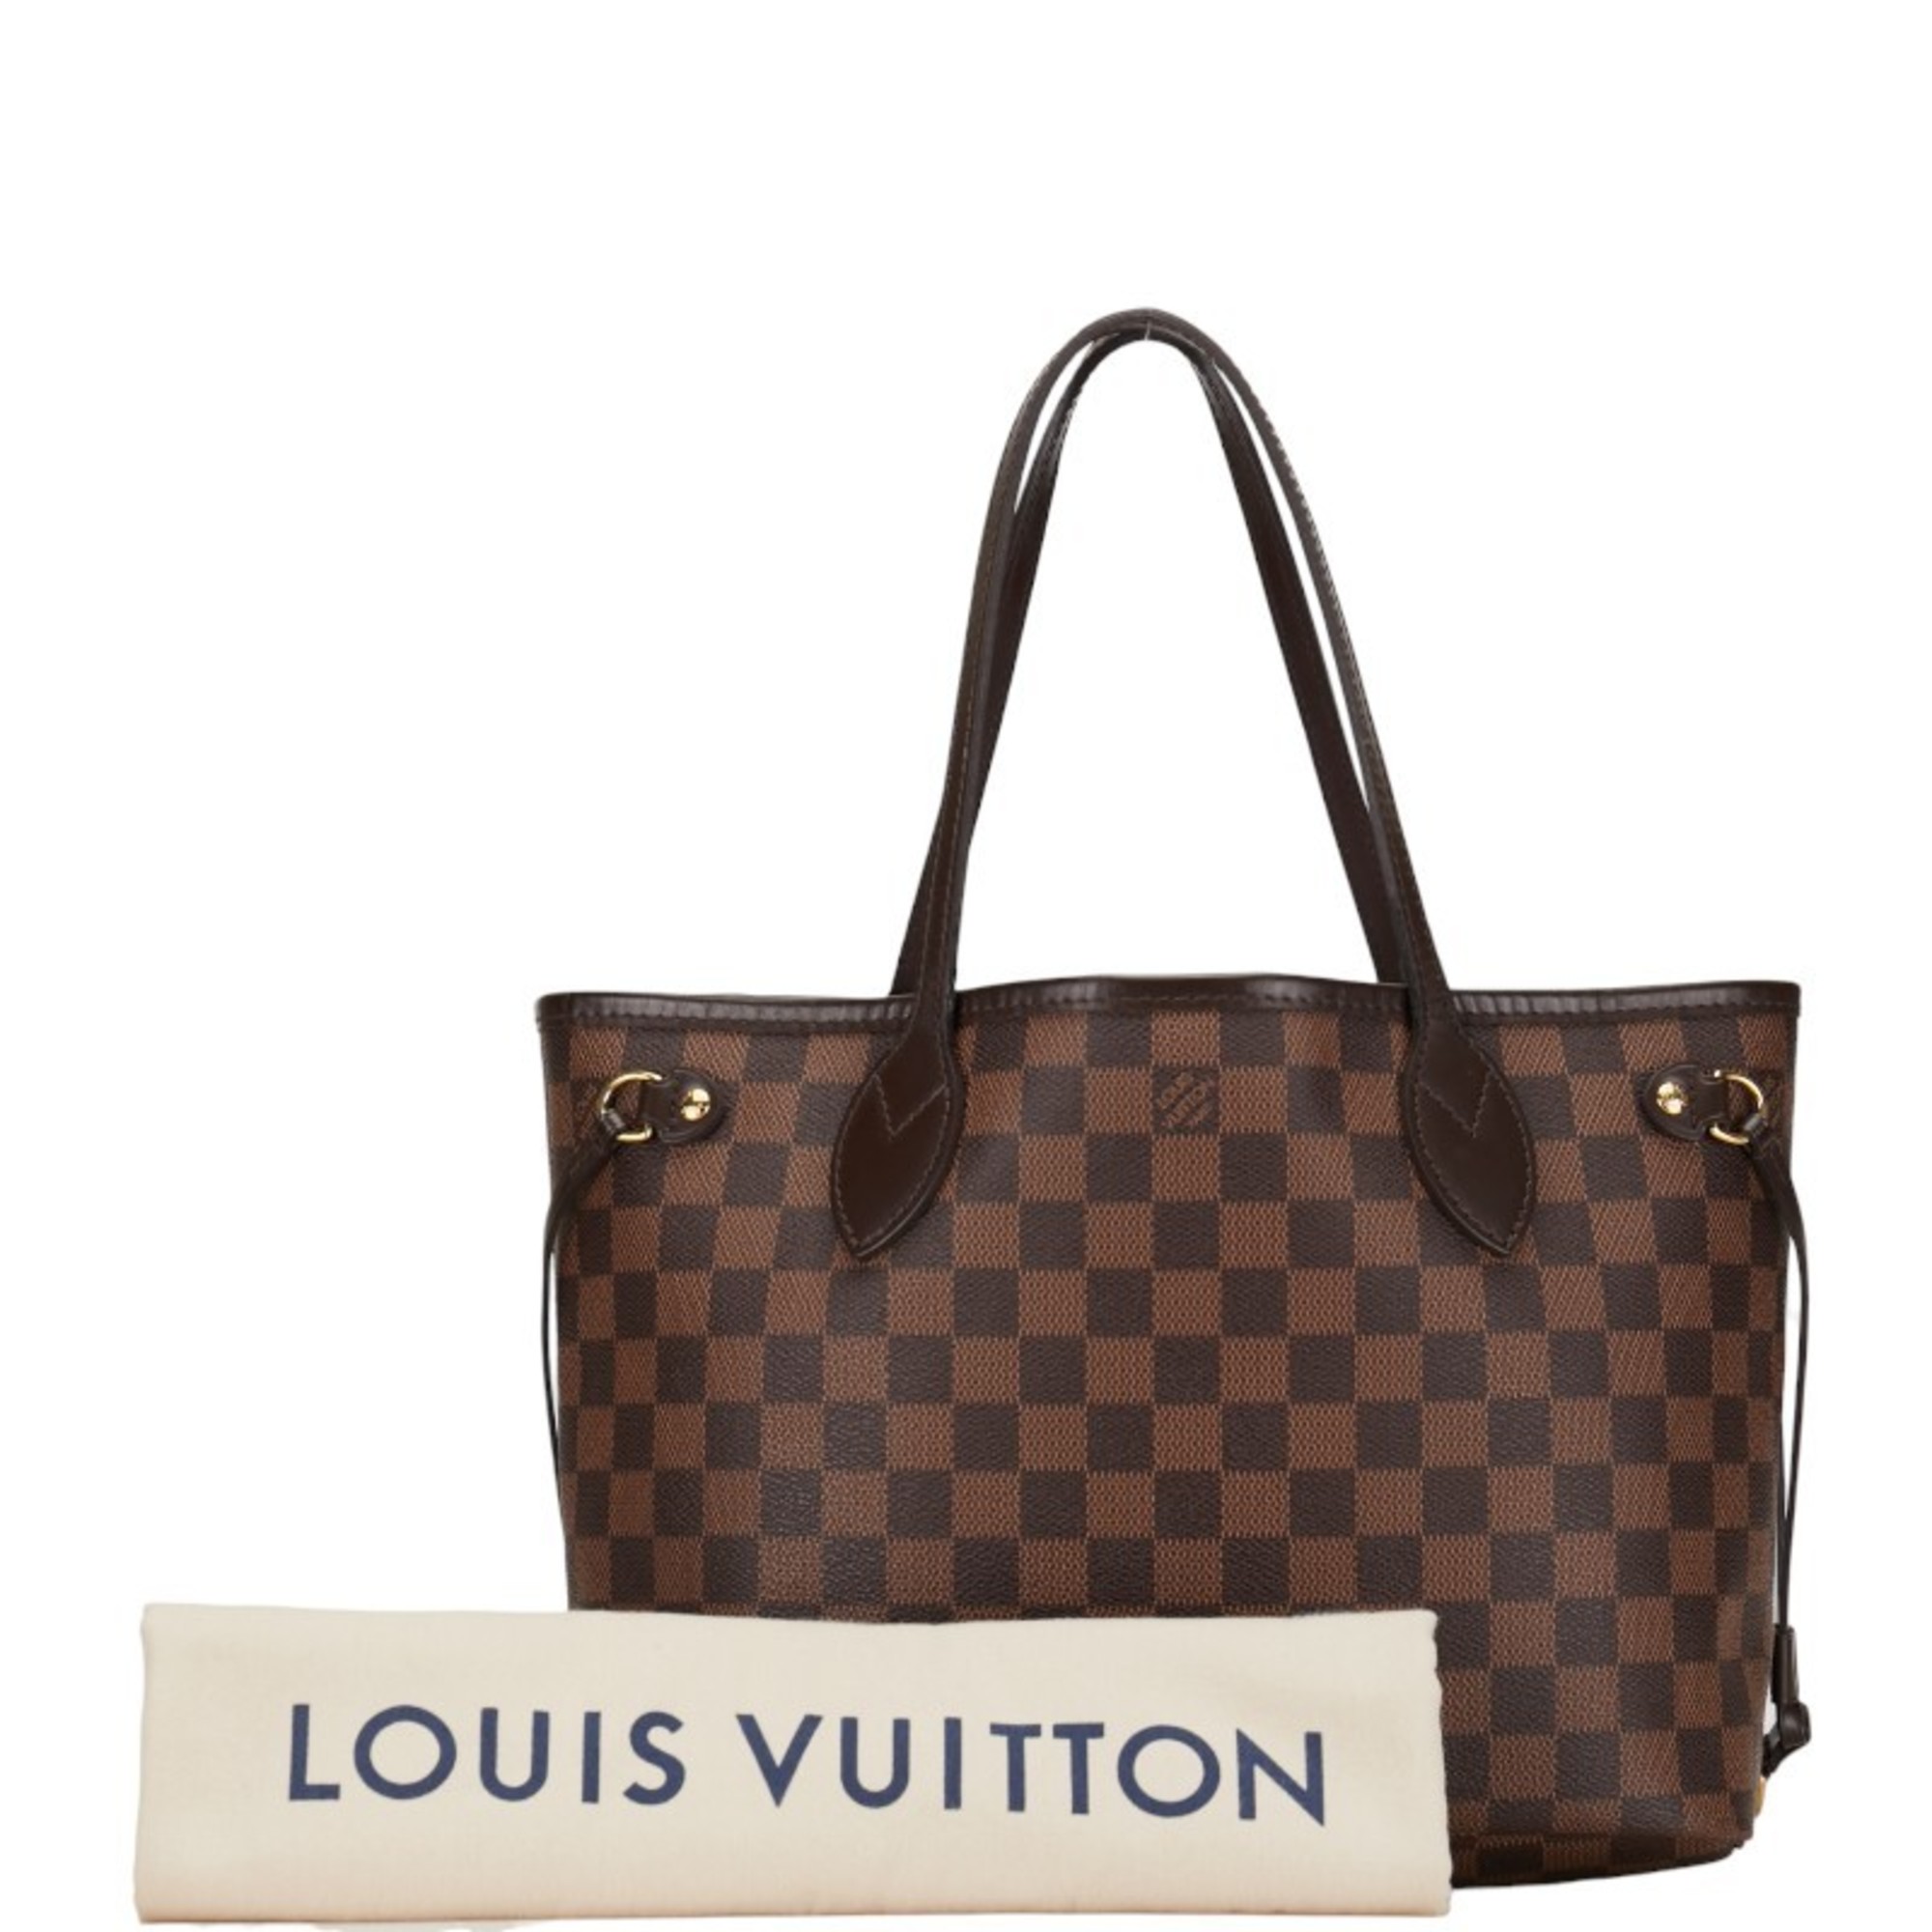 Louis Vuitton Damier Neverfull PM Handbag Tote Bag N51109 Brown PVC Leather Women's LOUIS VUITTON